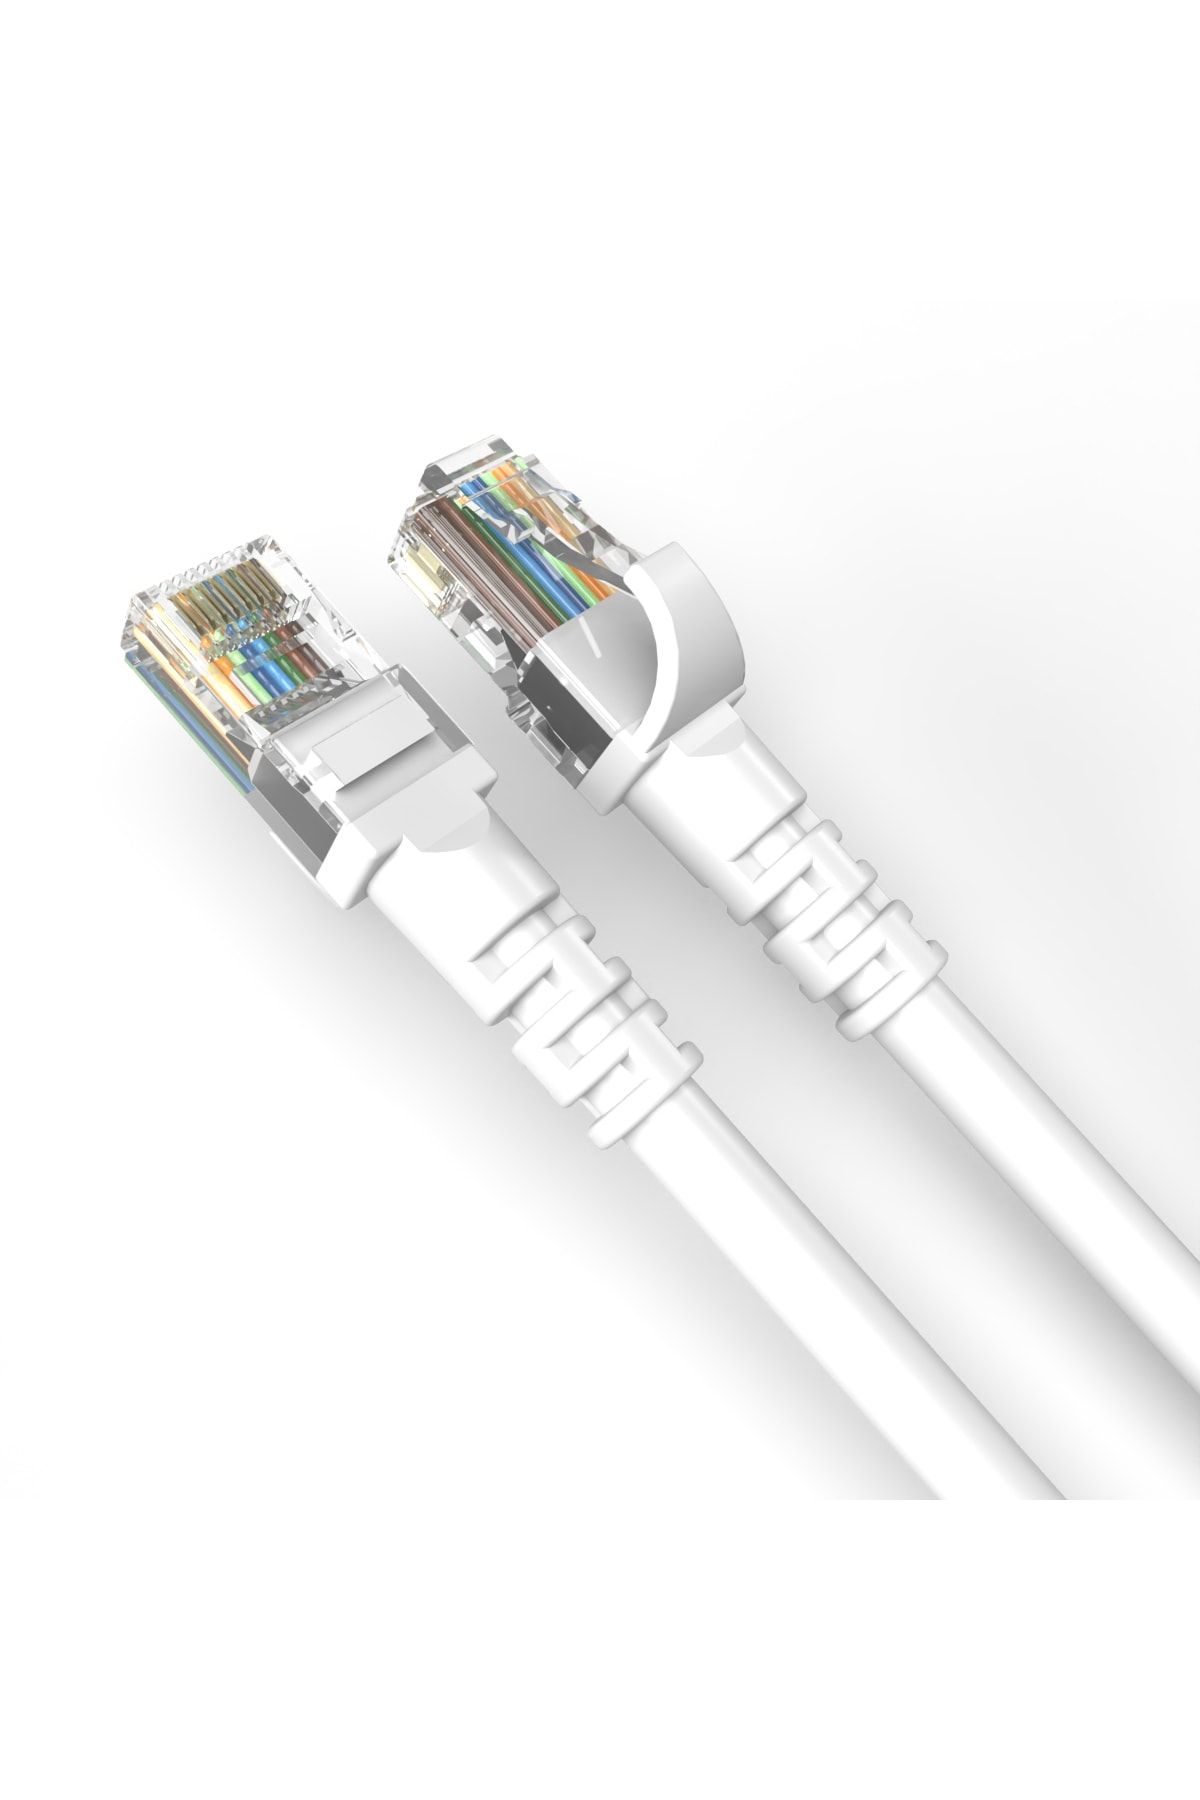 DERKAB 5 Metre Cat6 Network-Ağ-Ethernet Kablosu Beyaz